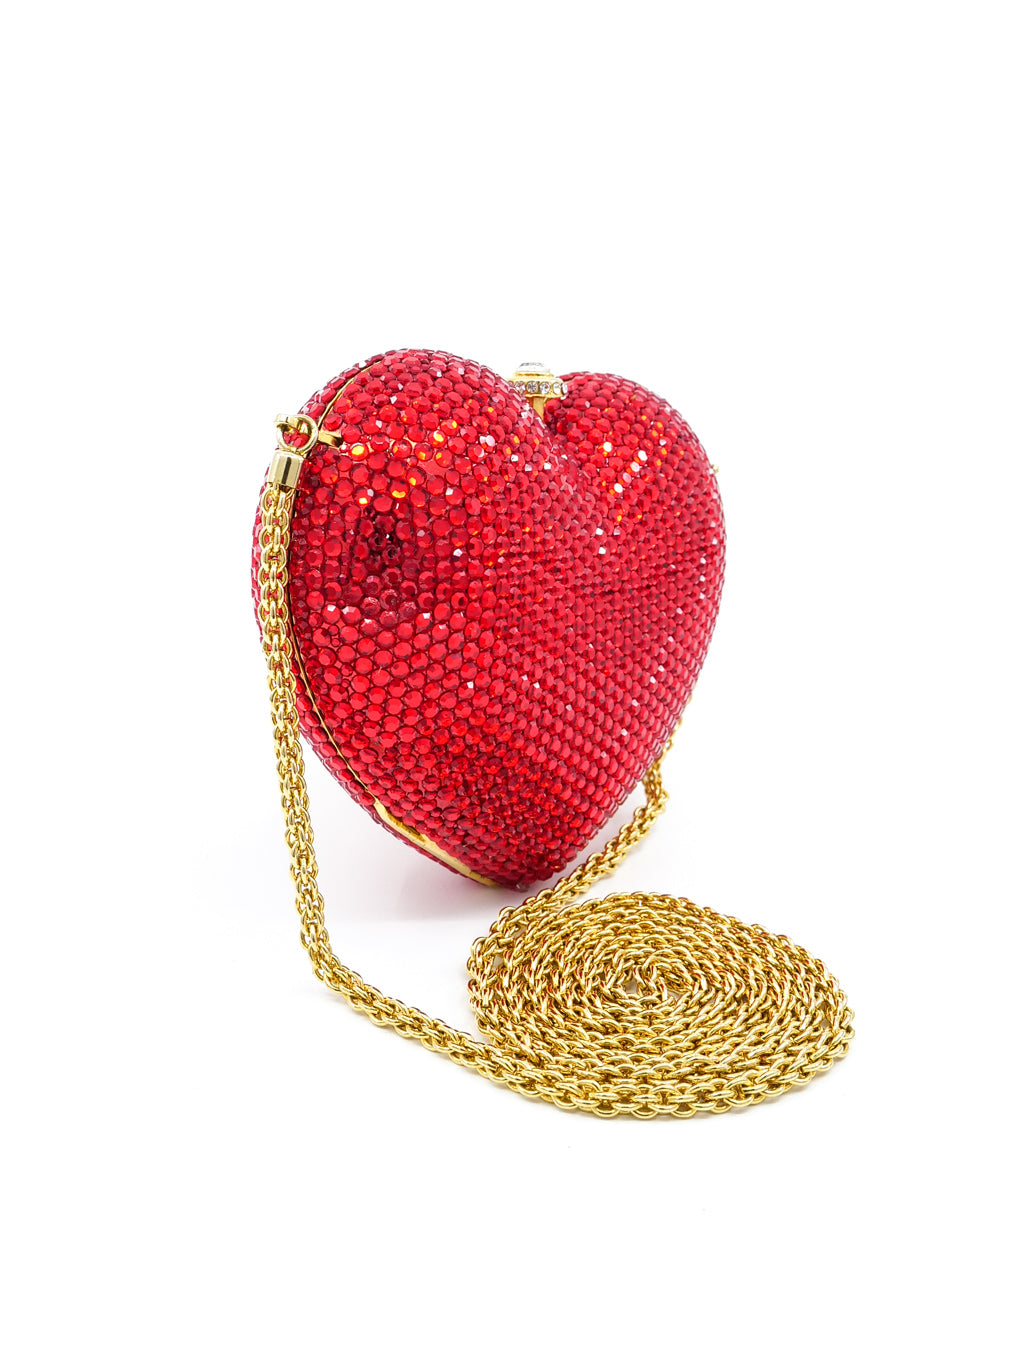 Anthony David Crystal Handbag - Red Heart